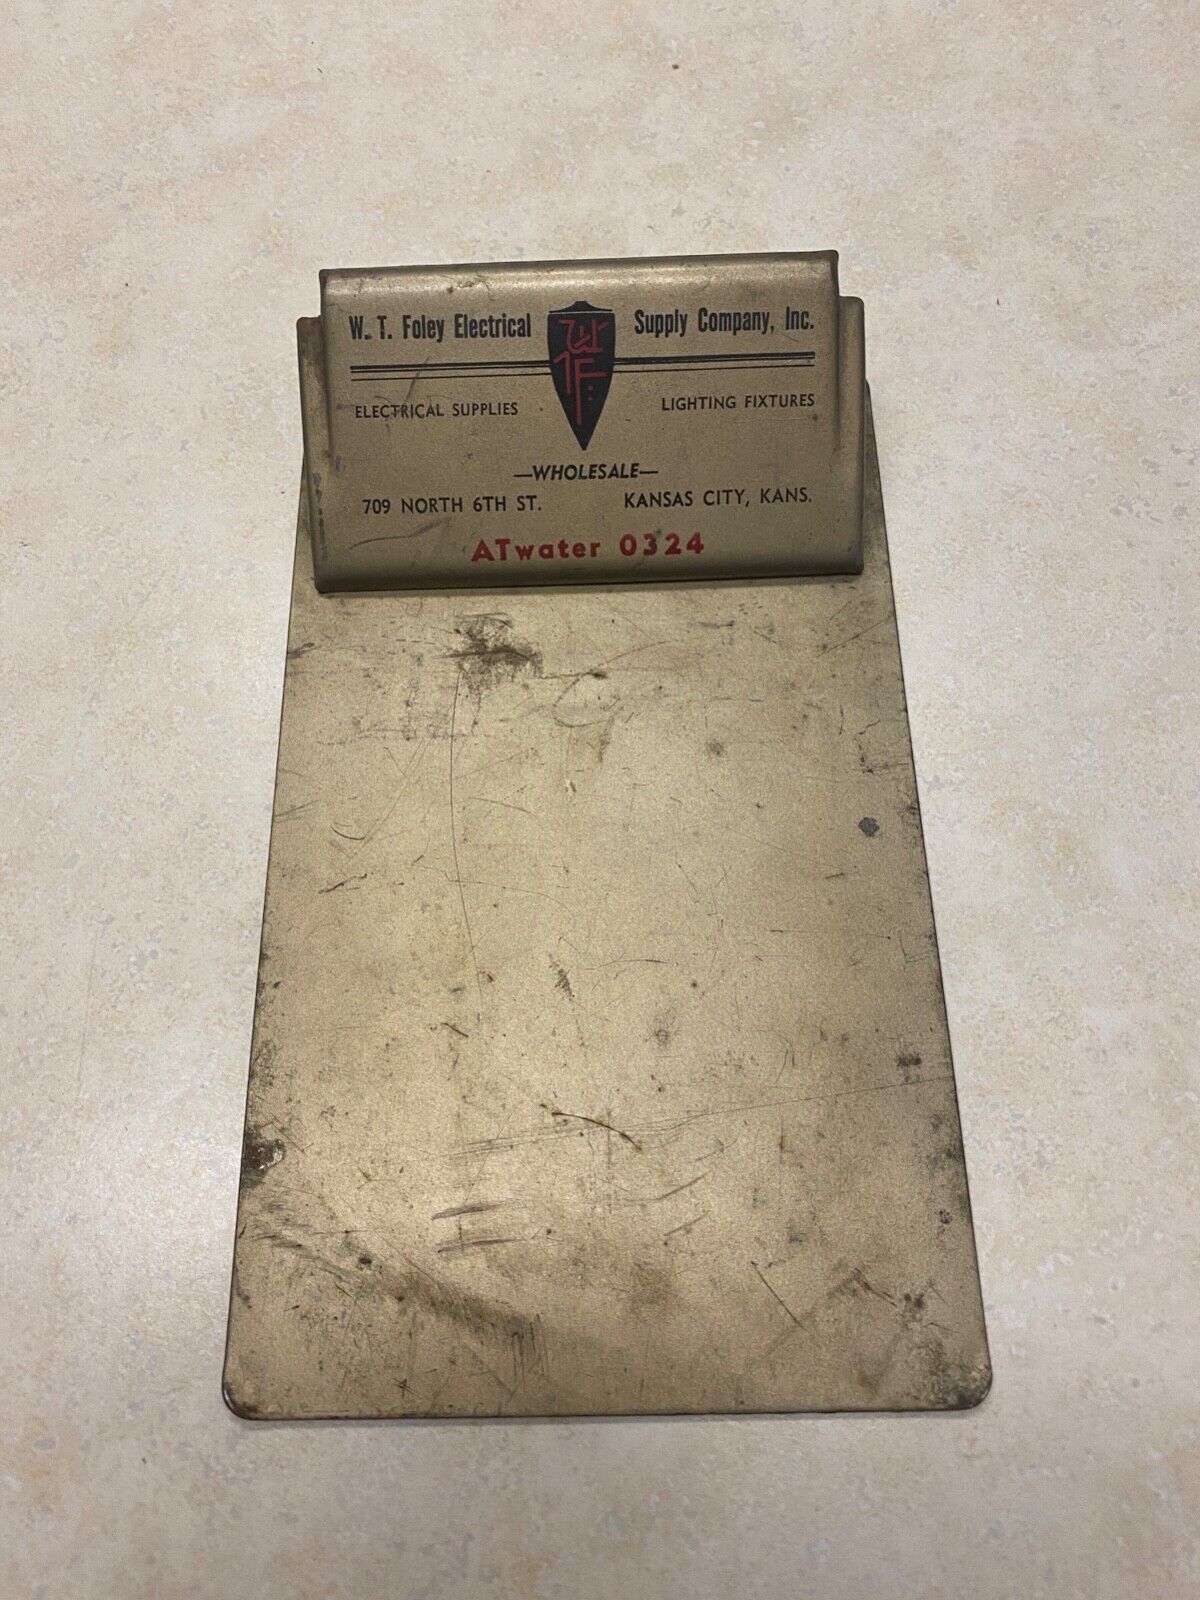 Vintage W. T. Foley Electrical Advertising Metal Clipboard - Kansas City, Kansas